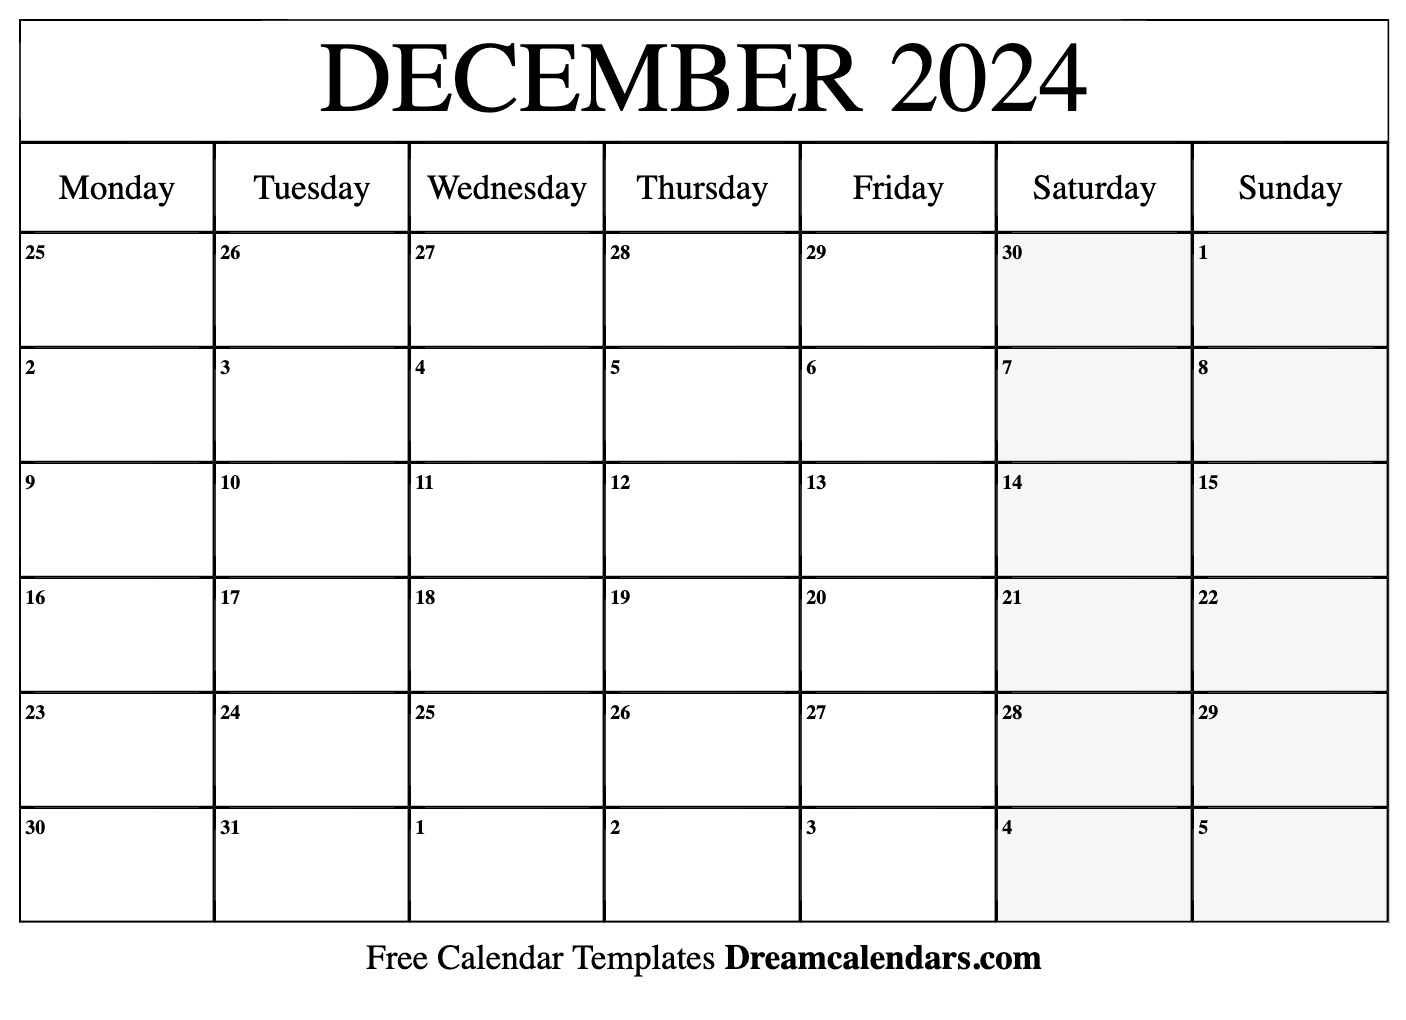 December Calendar 2024 With Holidays Calendar Quickly December 2024 Calendar Free Blank